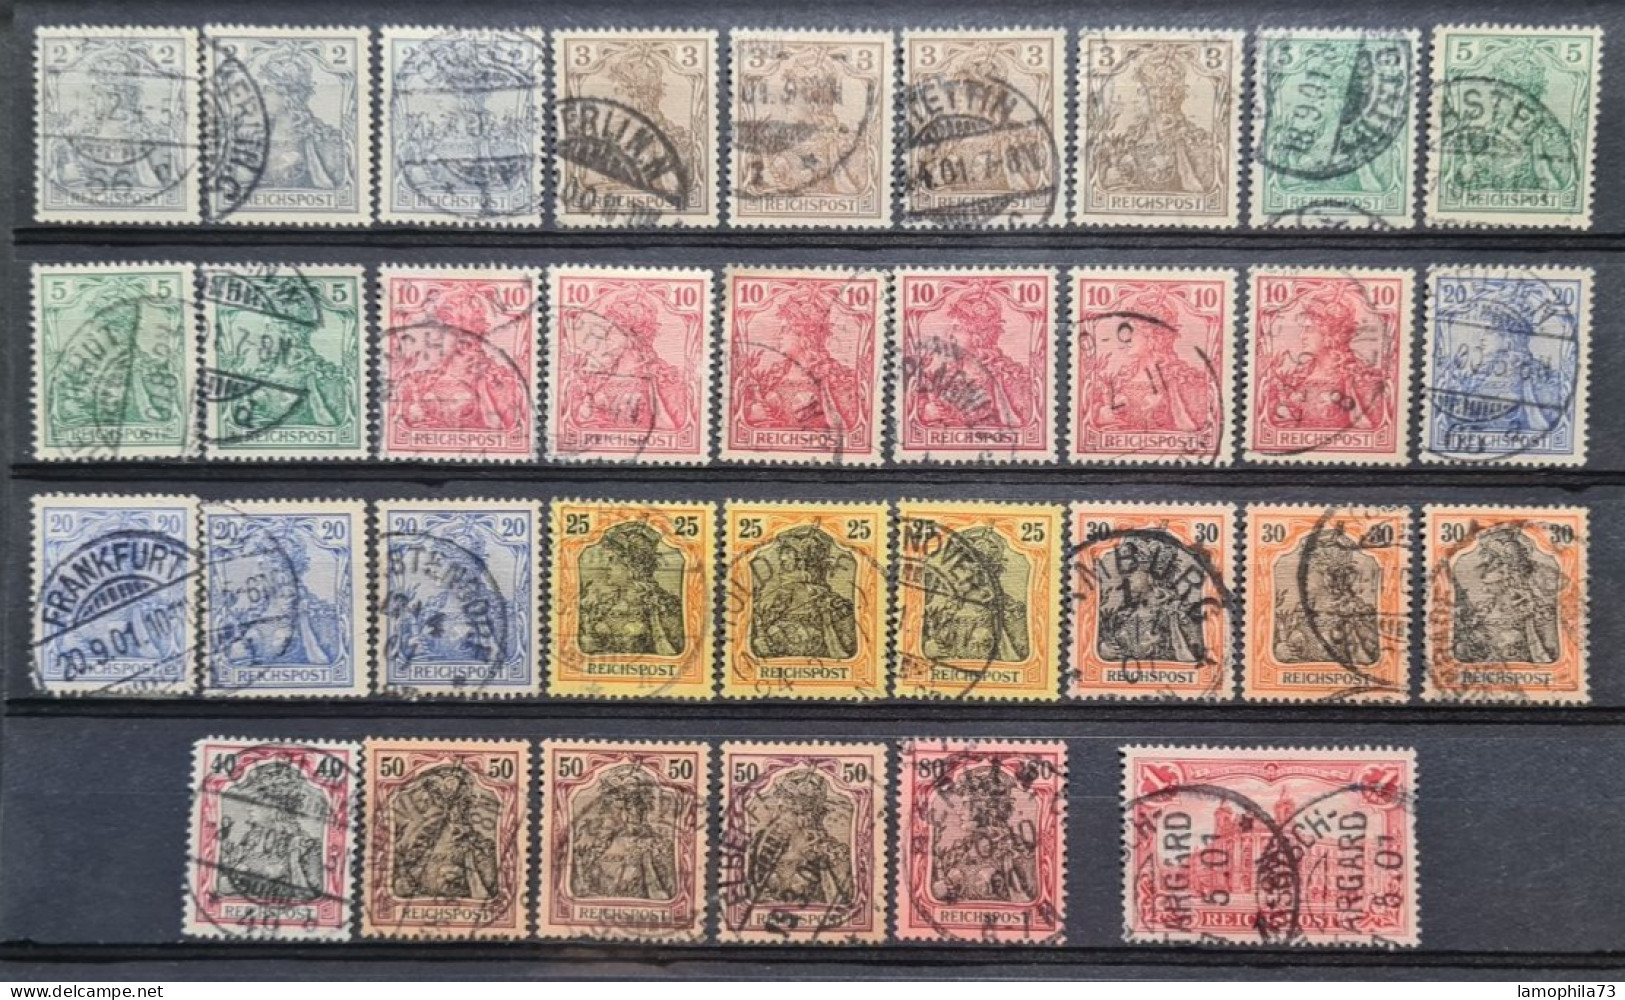 Allemagne Reichpost - Stamp(s) (O) - TB - 1 Scan(s) Réf-2321 - Gebruikt